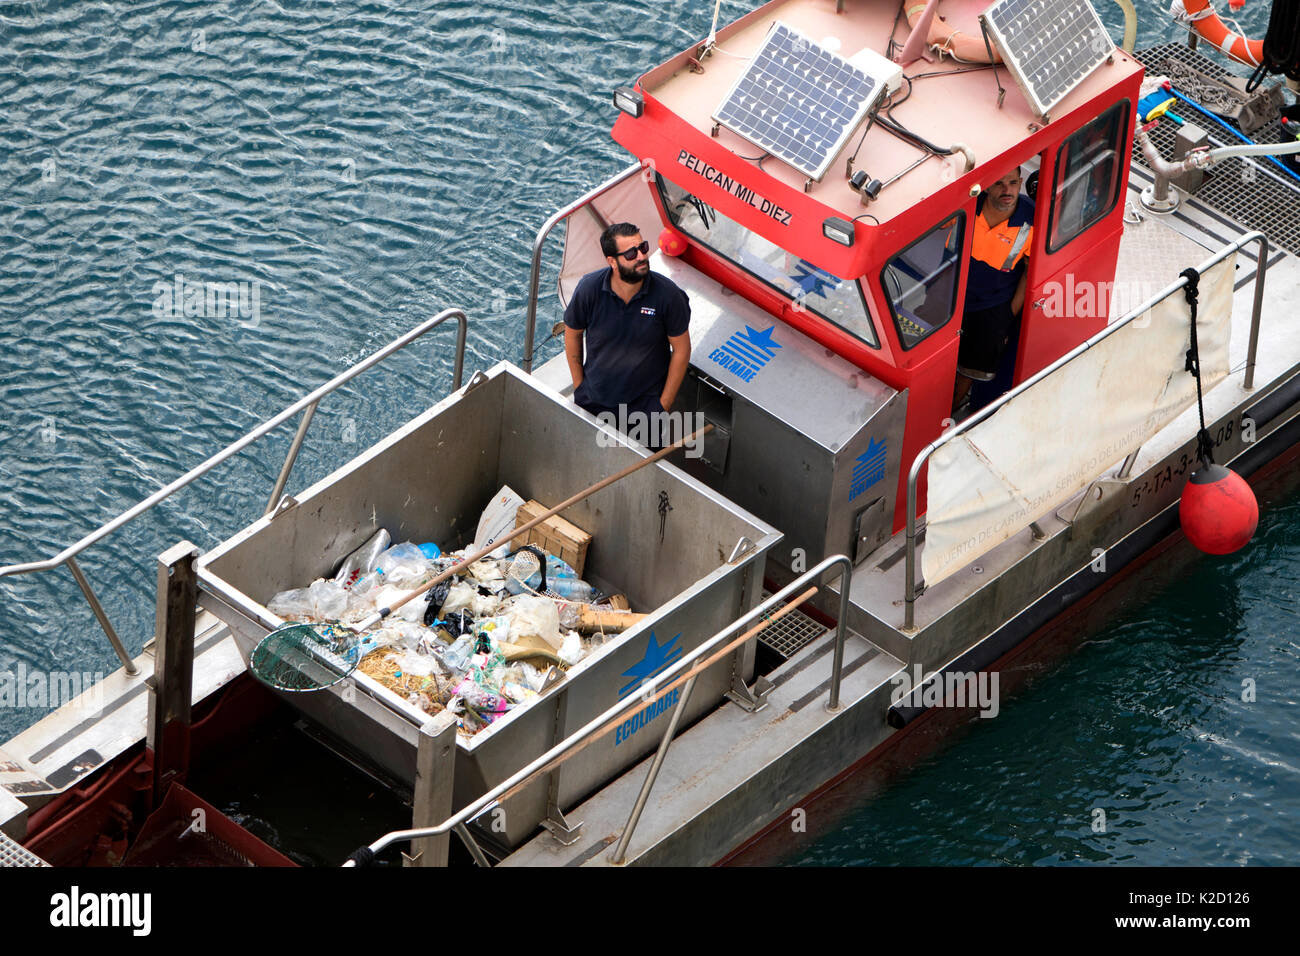 Pelican Mil Diez working boat Stock Photo